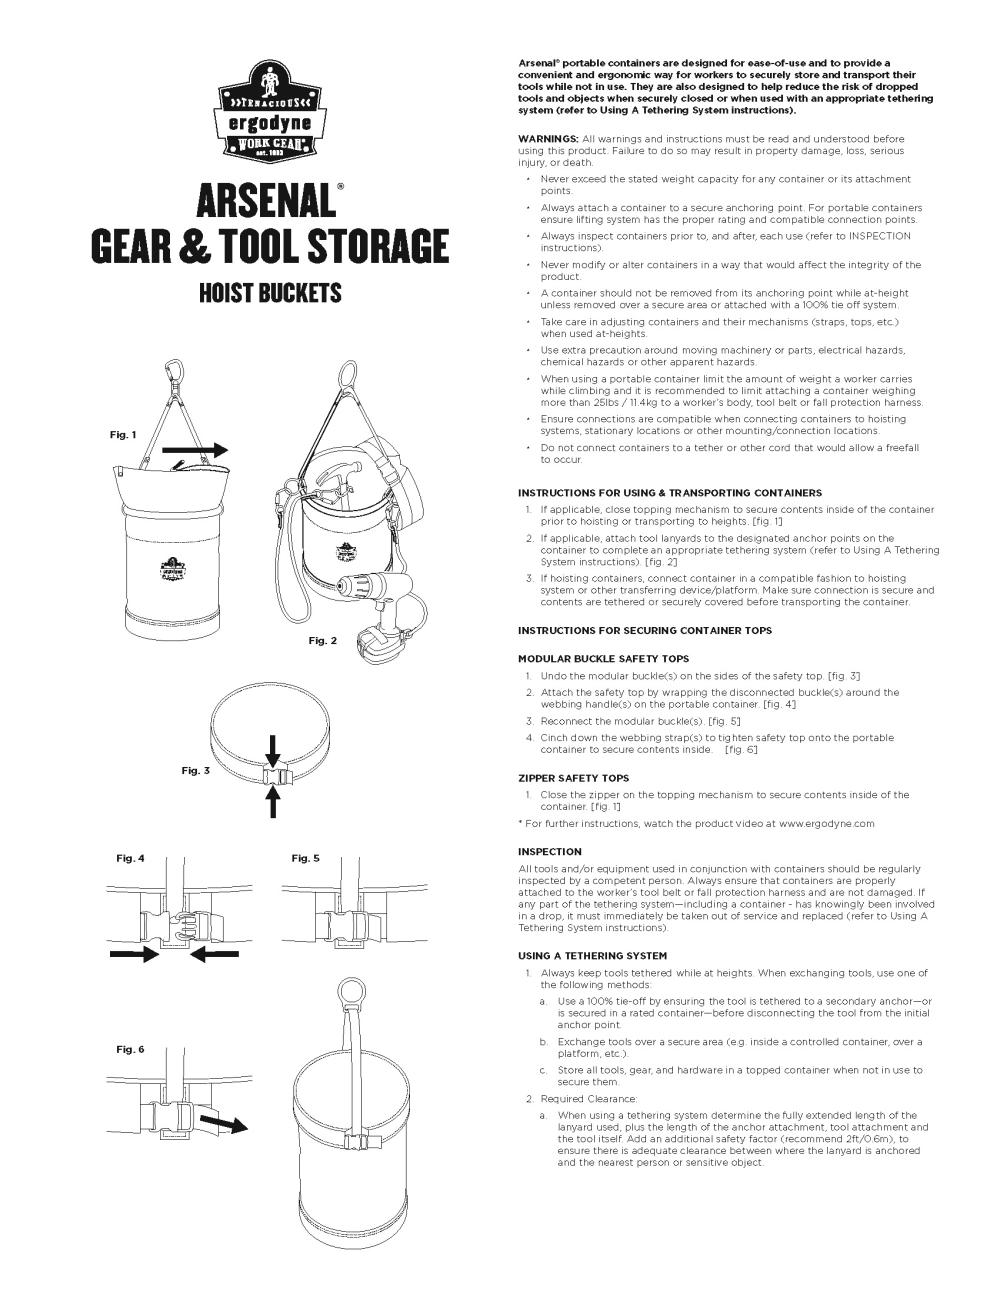 Arsenal Hoist Bucket instructions